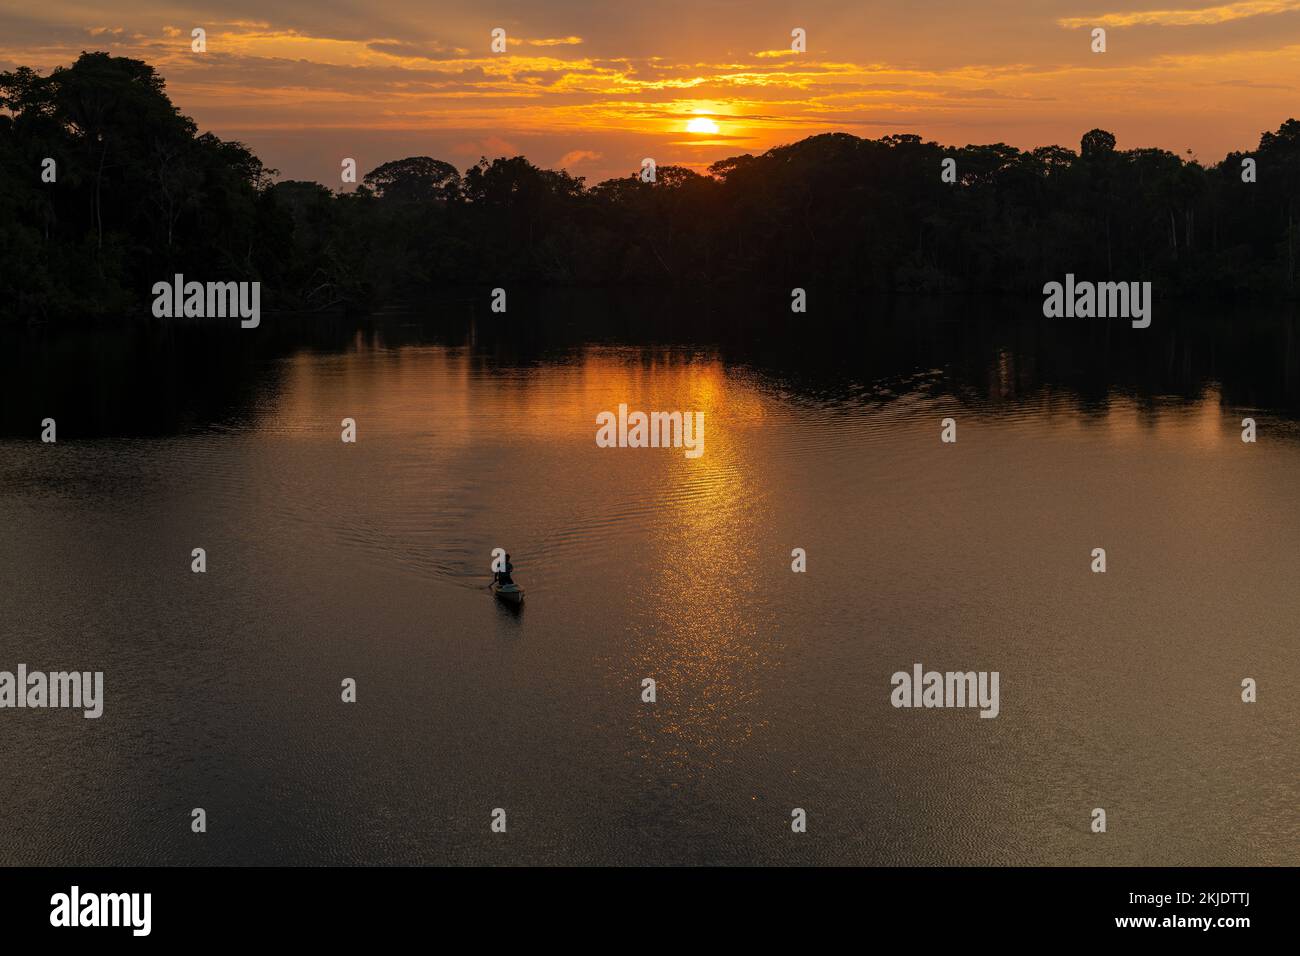 Männersilhouette im Kanu bei Sonnenaufgang, Amazonas Regenwald. Amazonas-Einzugsgebiet in Brasilien, Peru, Ecuador, Bolivien, Guyana, Venezuela, Kolumbien, Suriname. Stockfoto